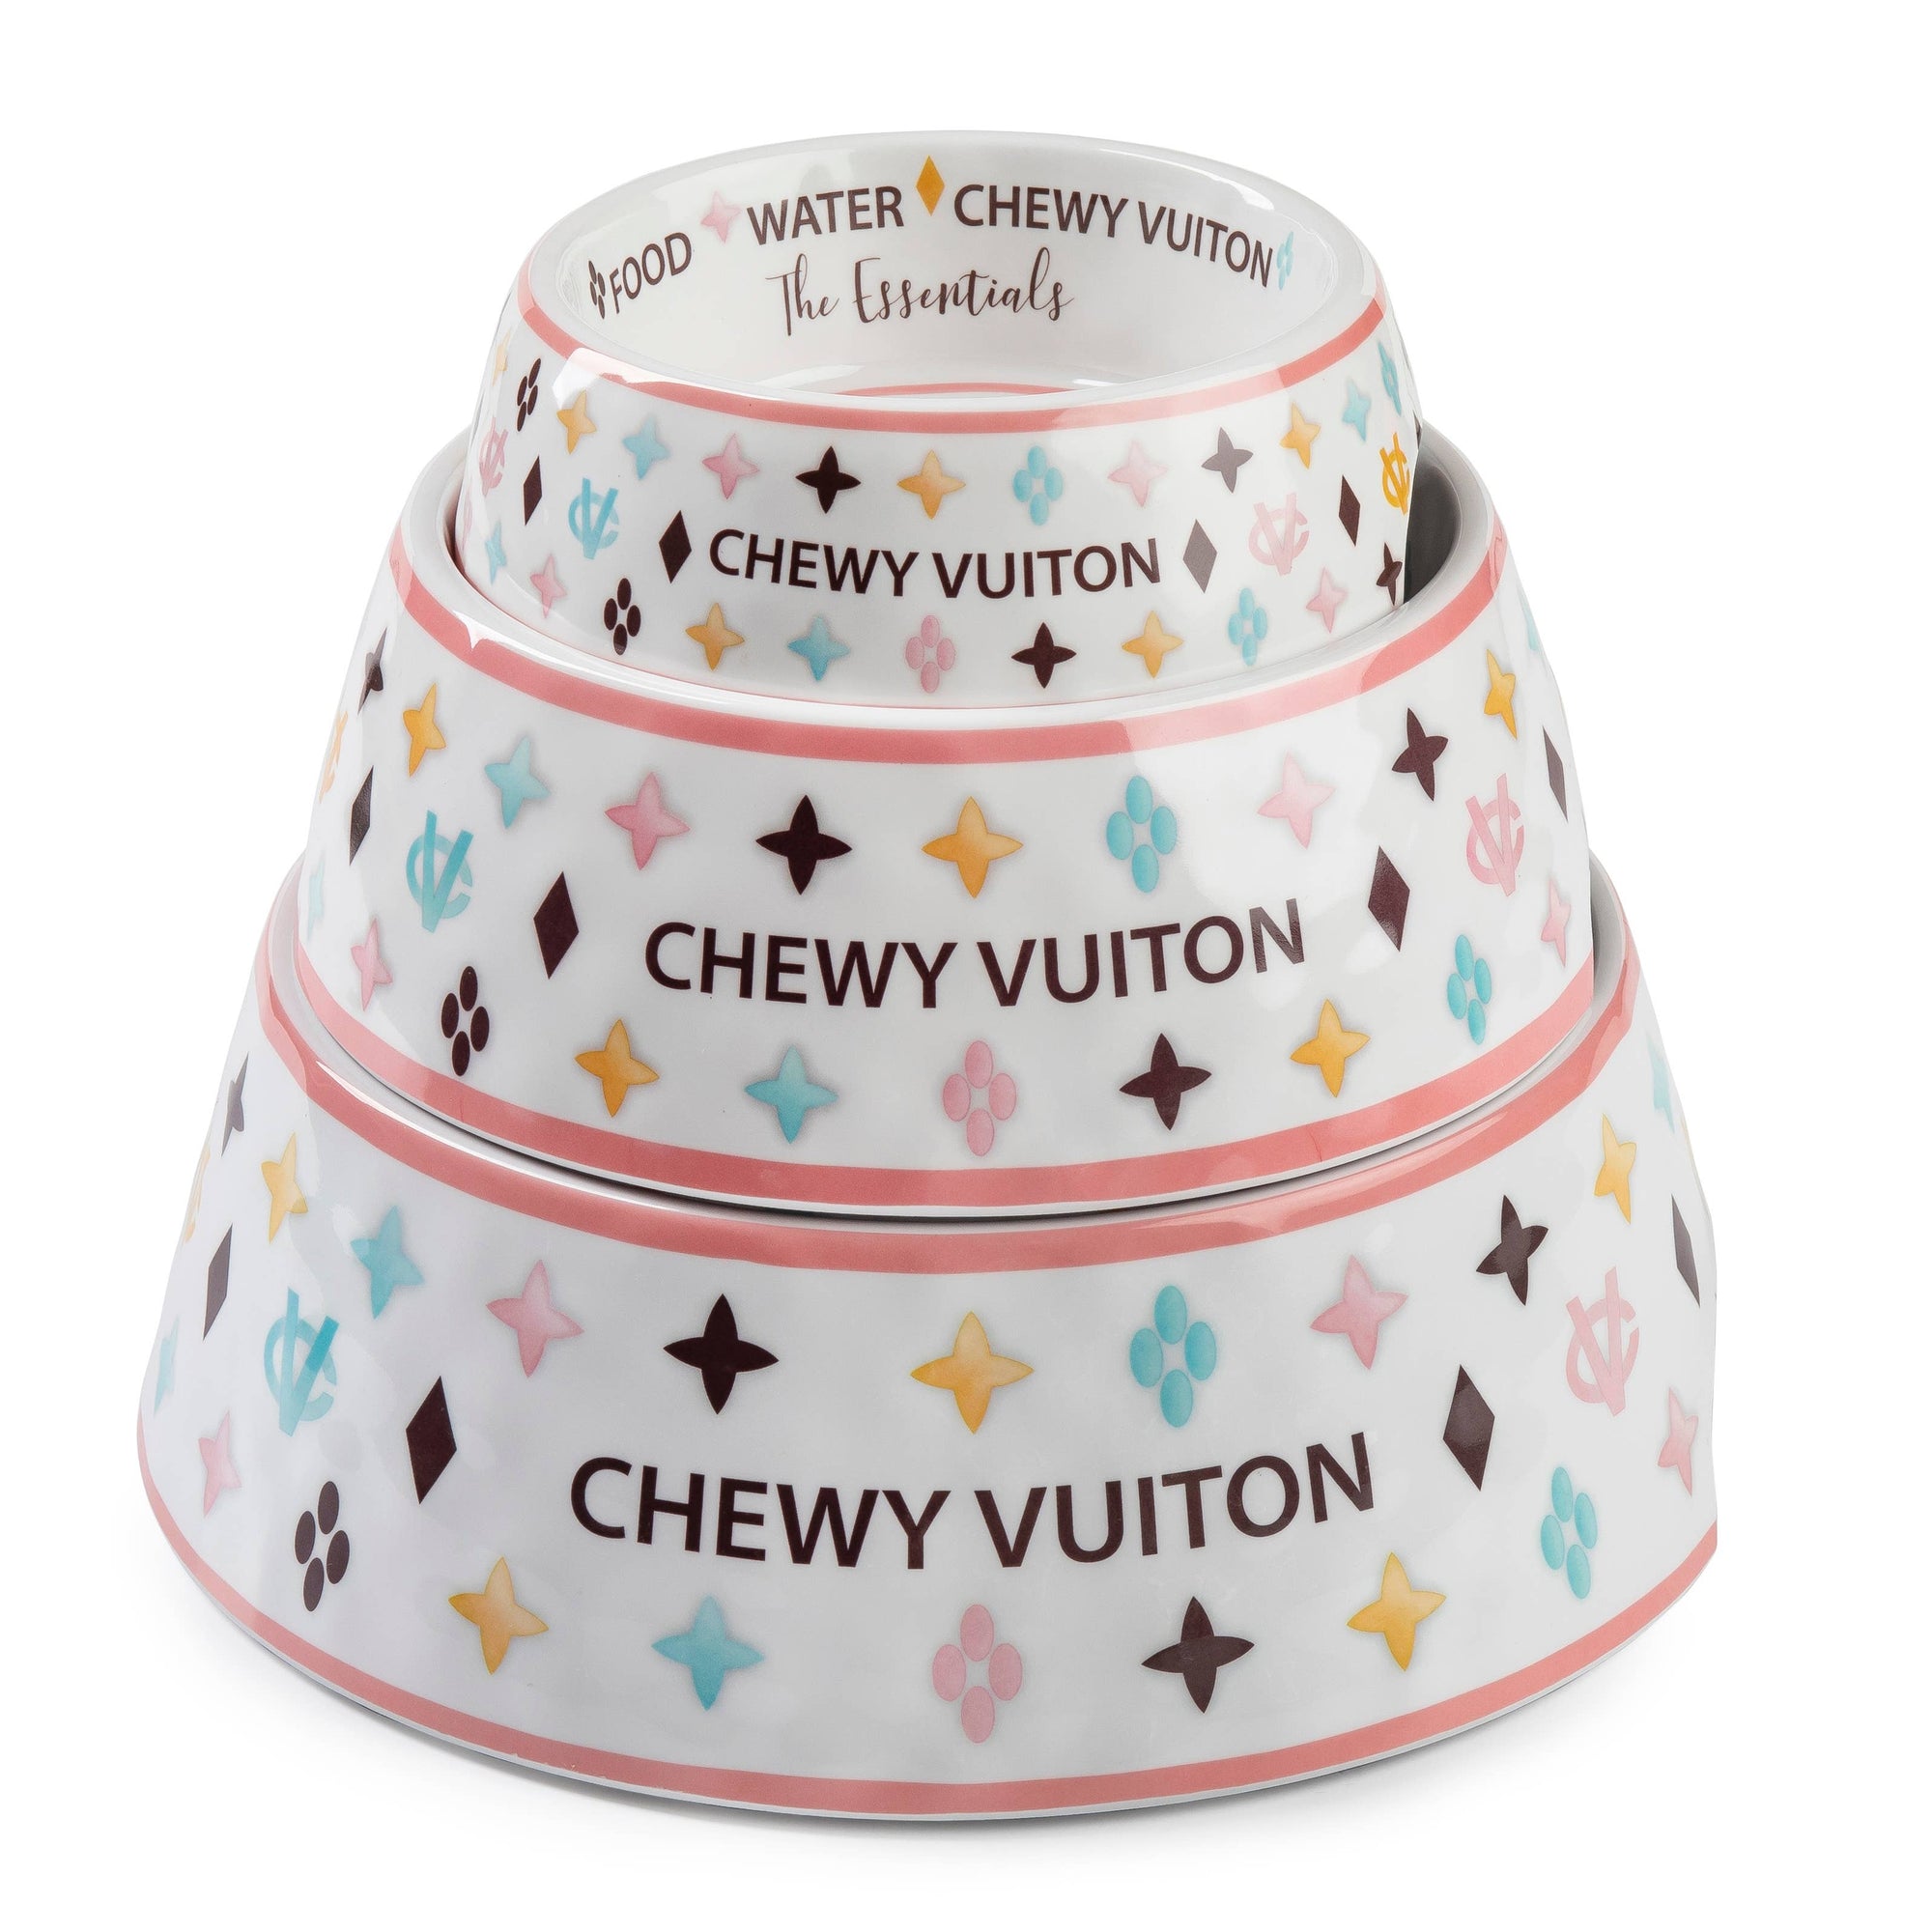 White Chewy Vuiton Dog Bowl